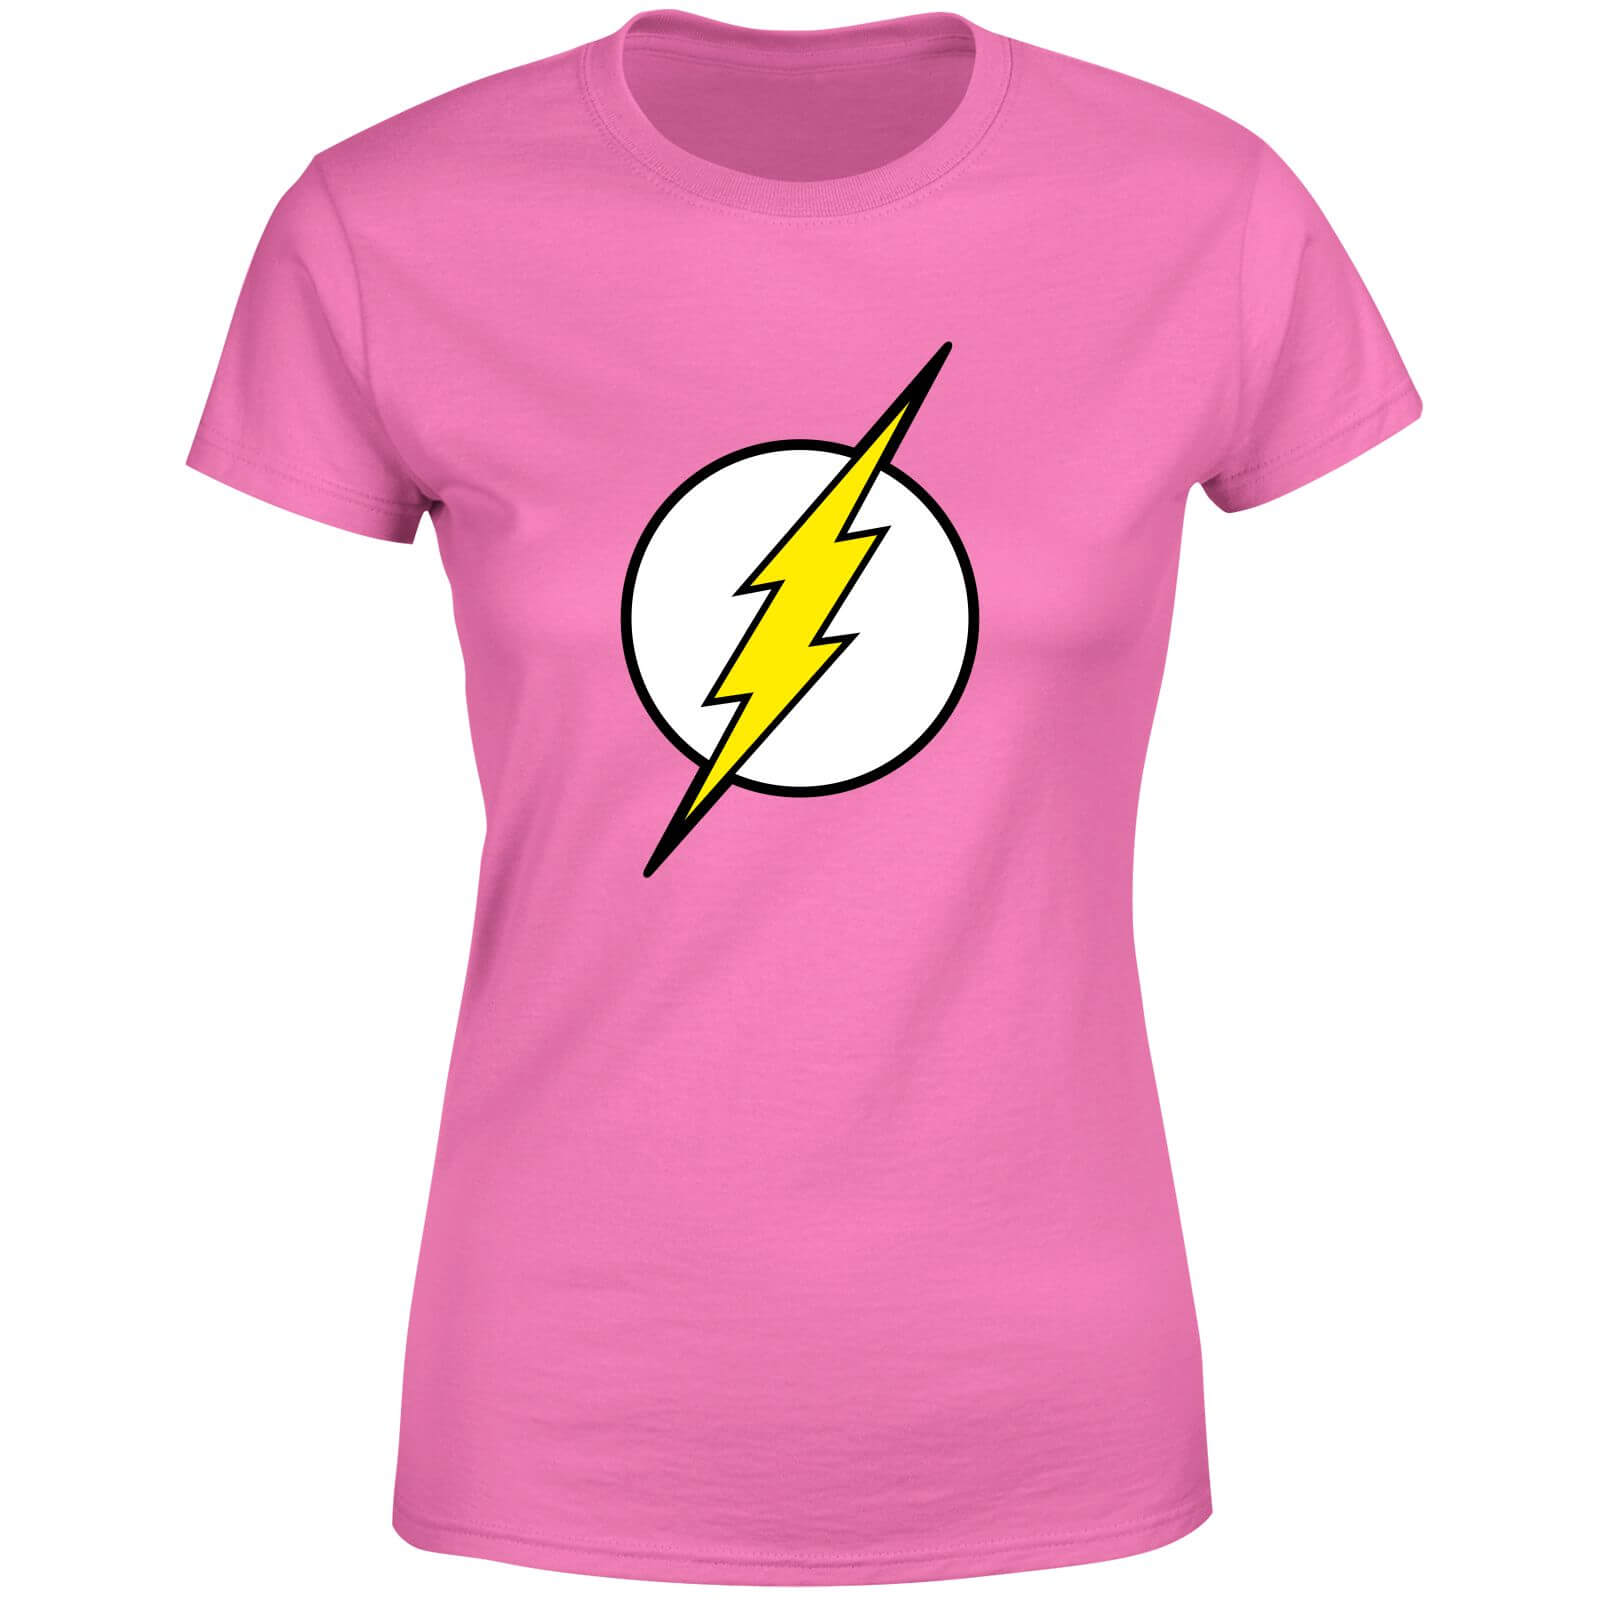 Justice League Flash Logo Women's T-Shirt - Pink - XL - Pink